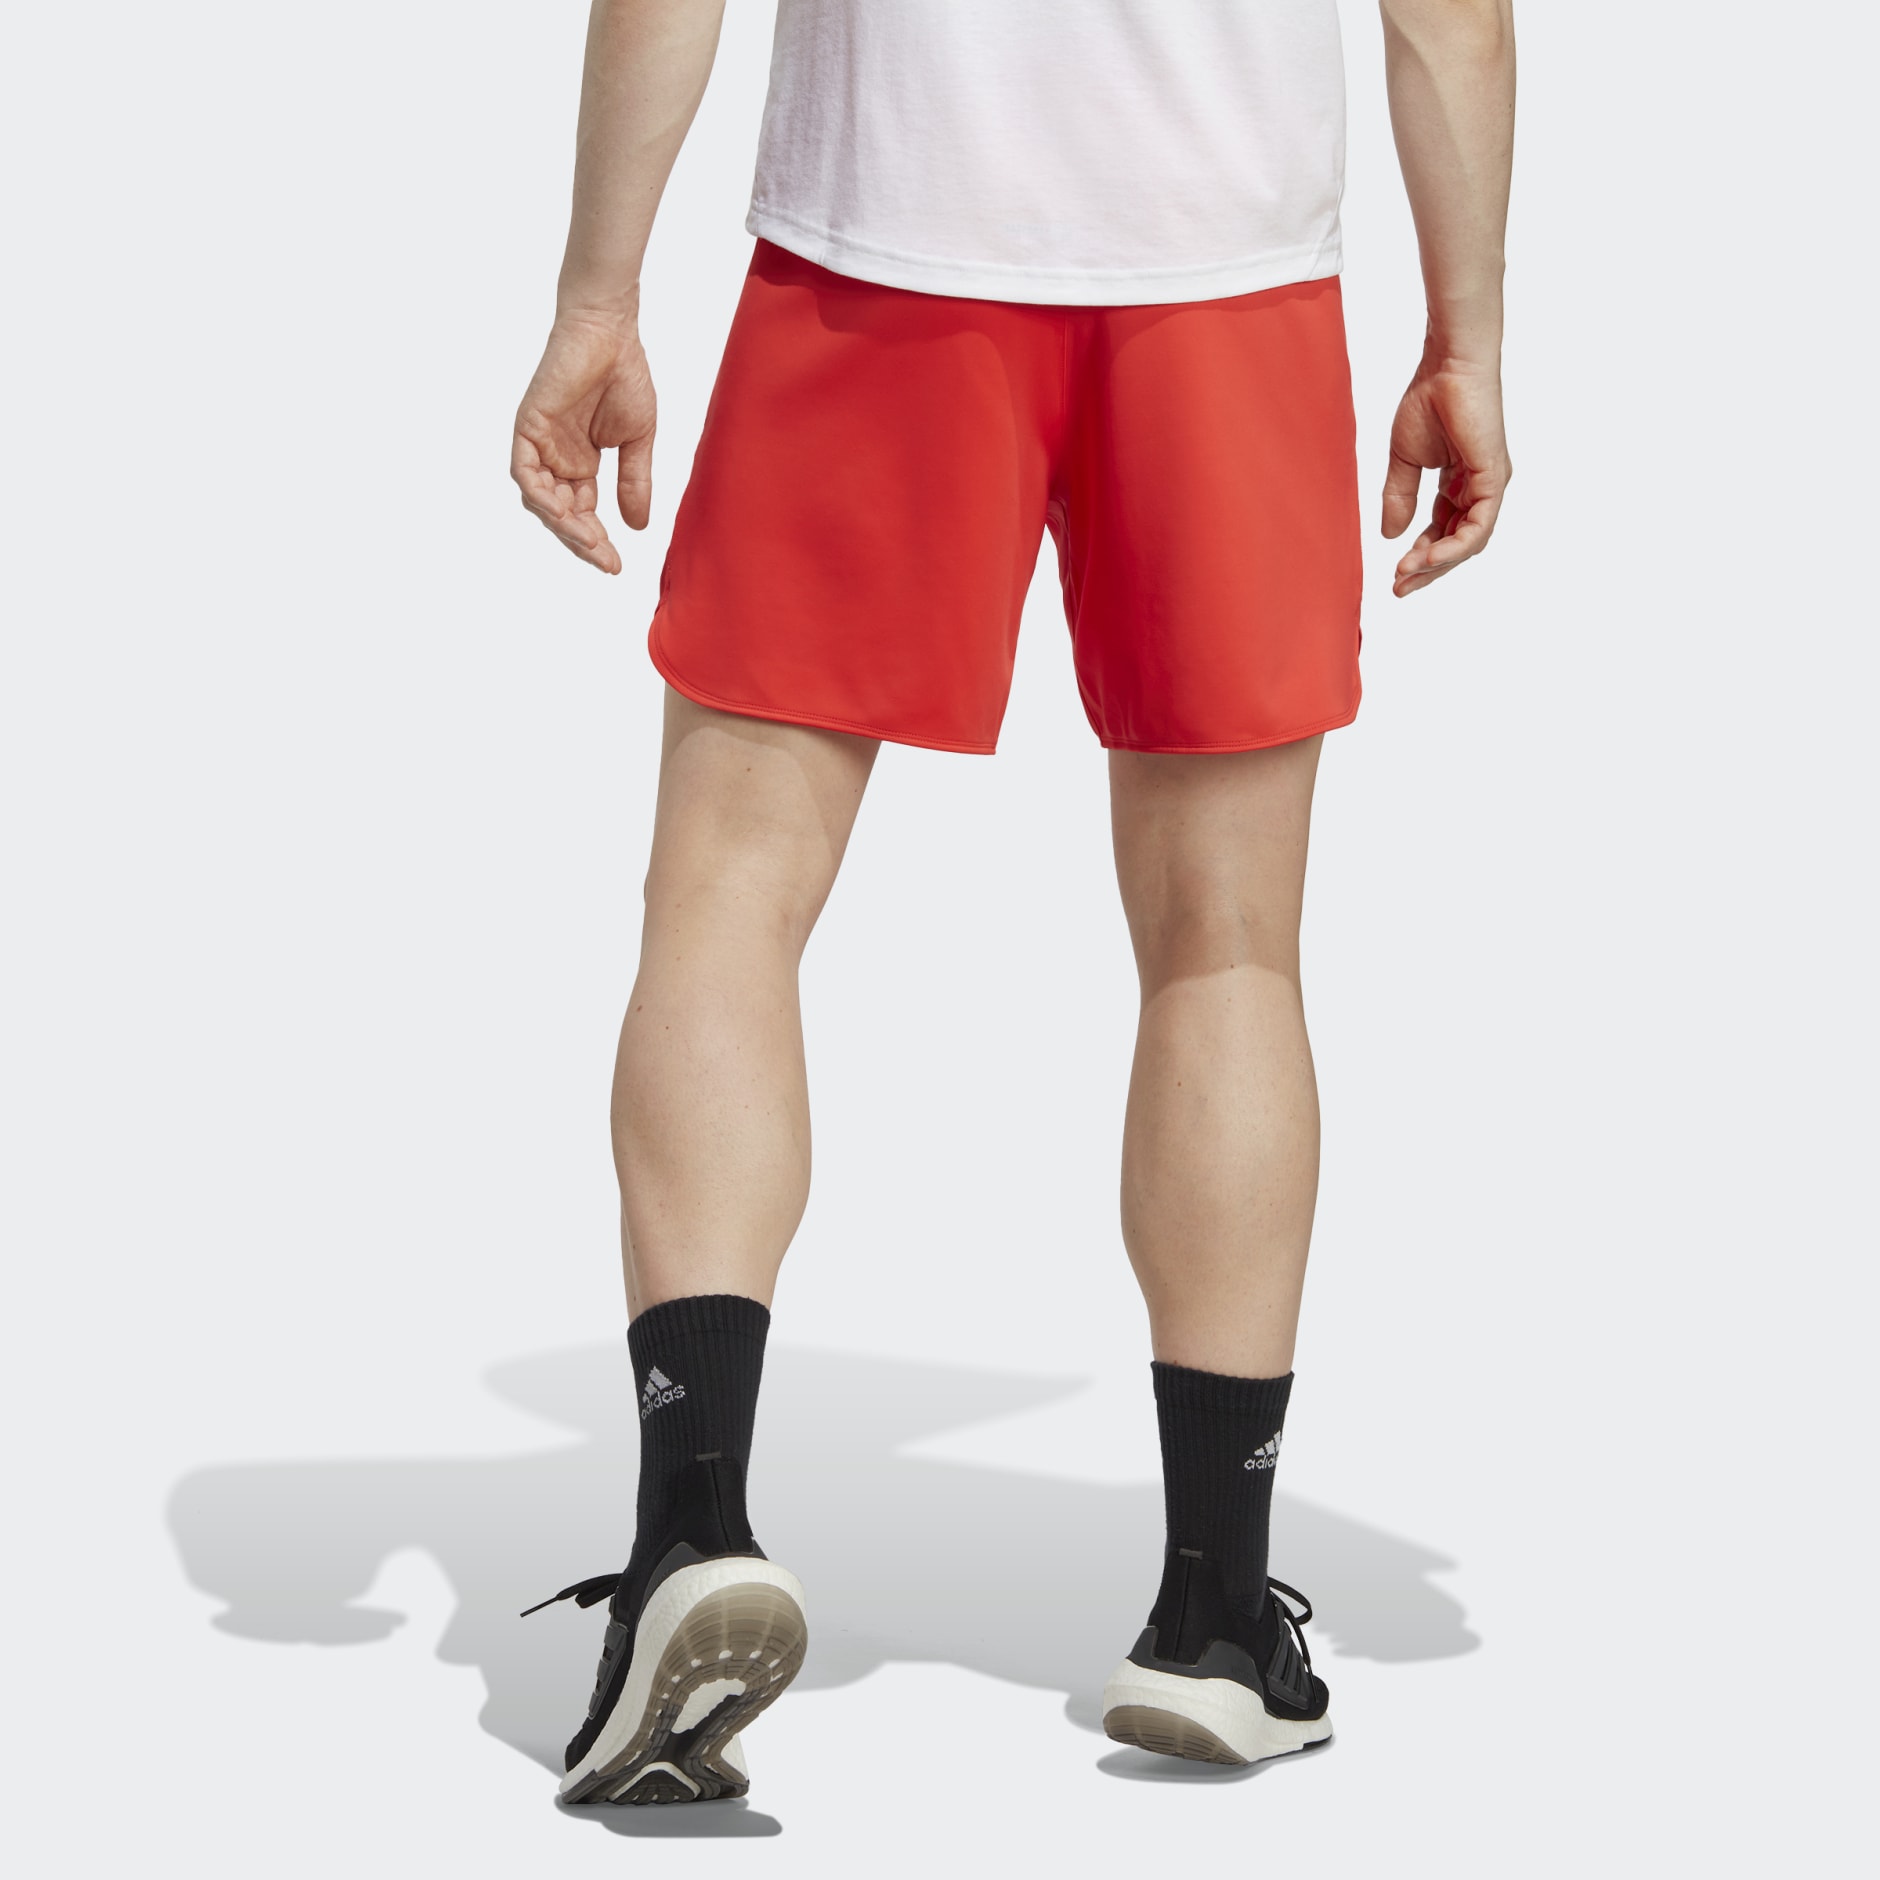 behuizing Beschrijven Eerbetoon Men's Clothing - Designed for Training Shorts - Red | adidas Saudi Arabia